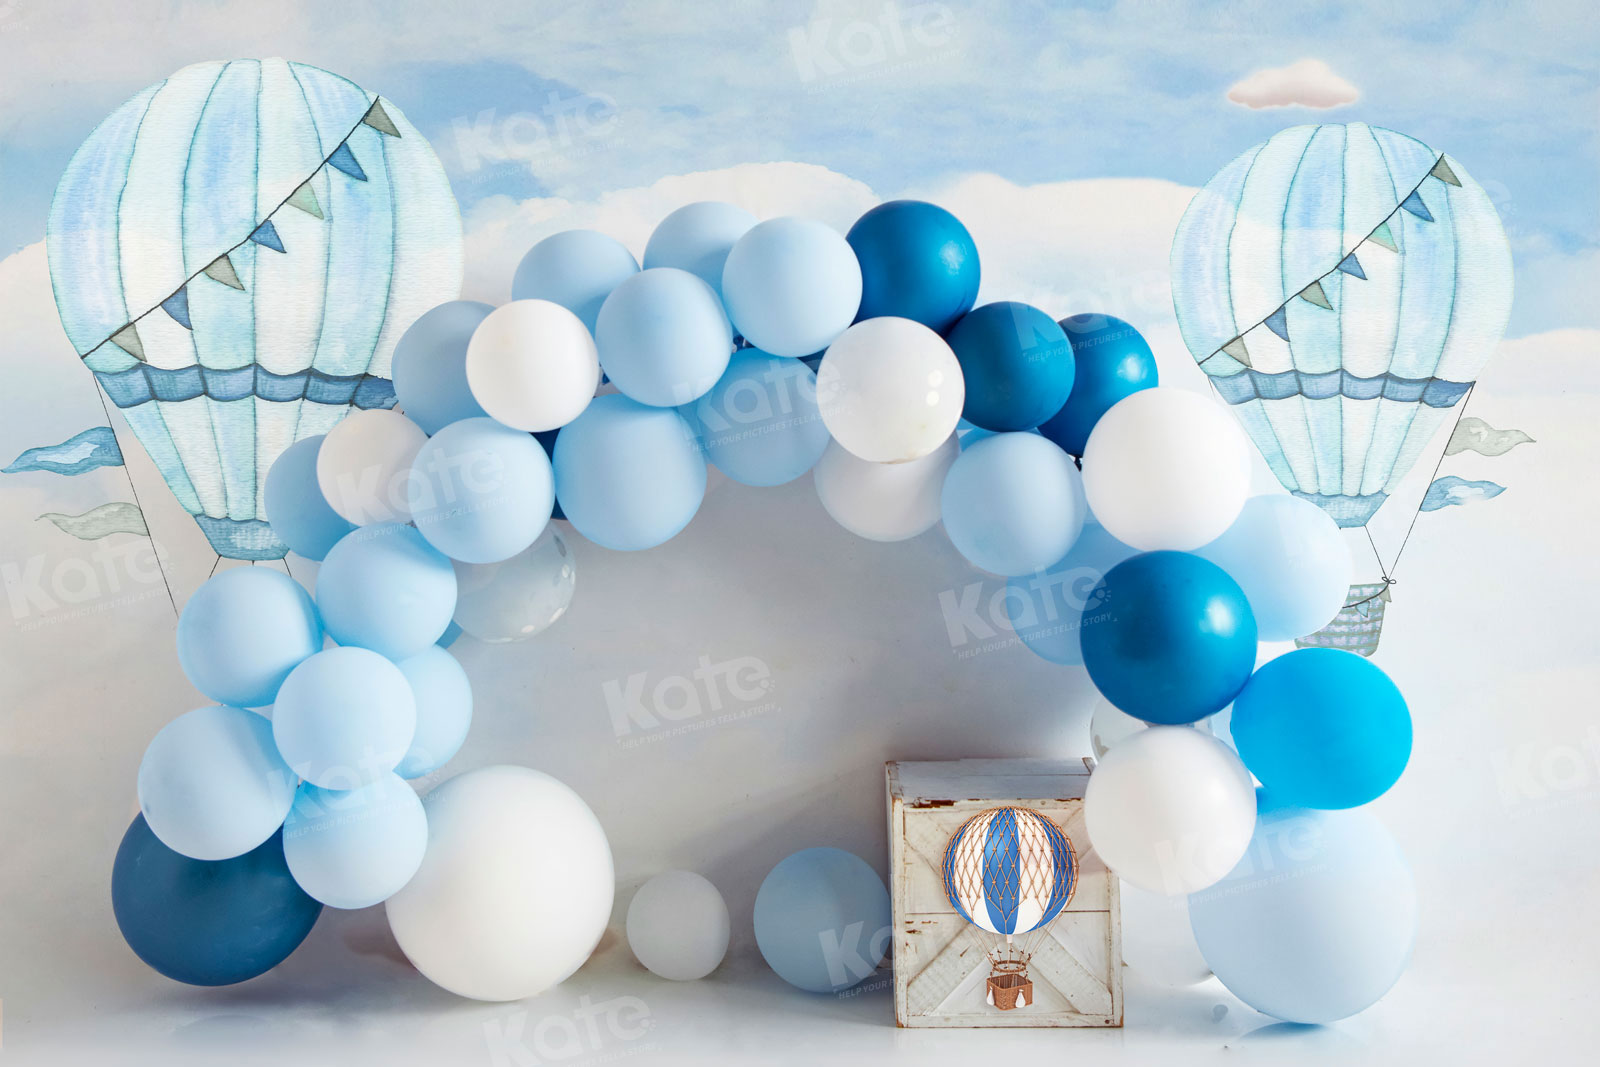 Kate Hot Air Blue Balloon Arch Cake Smash Backdrop for Photography